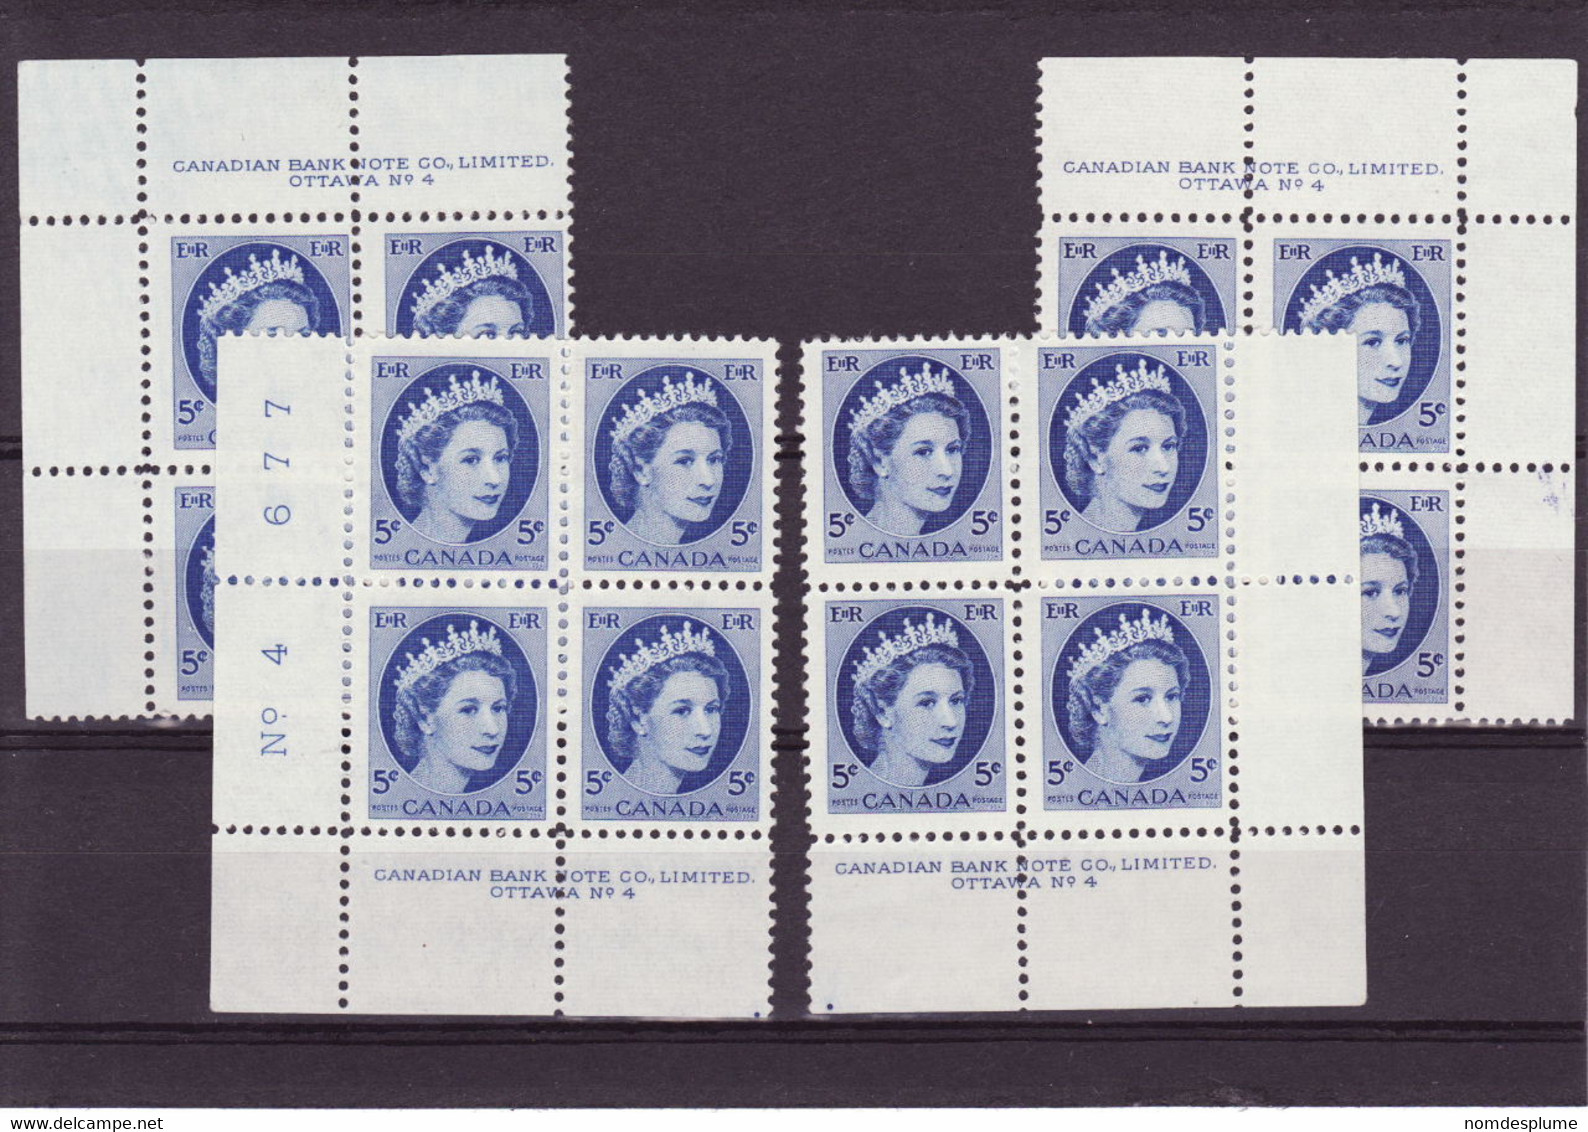 7922) Canada QE II Wilding Block Mint Light Hinge Plate 4 - Plate Number & Inscriptions